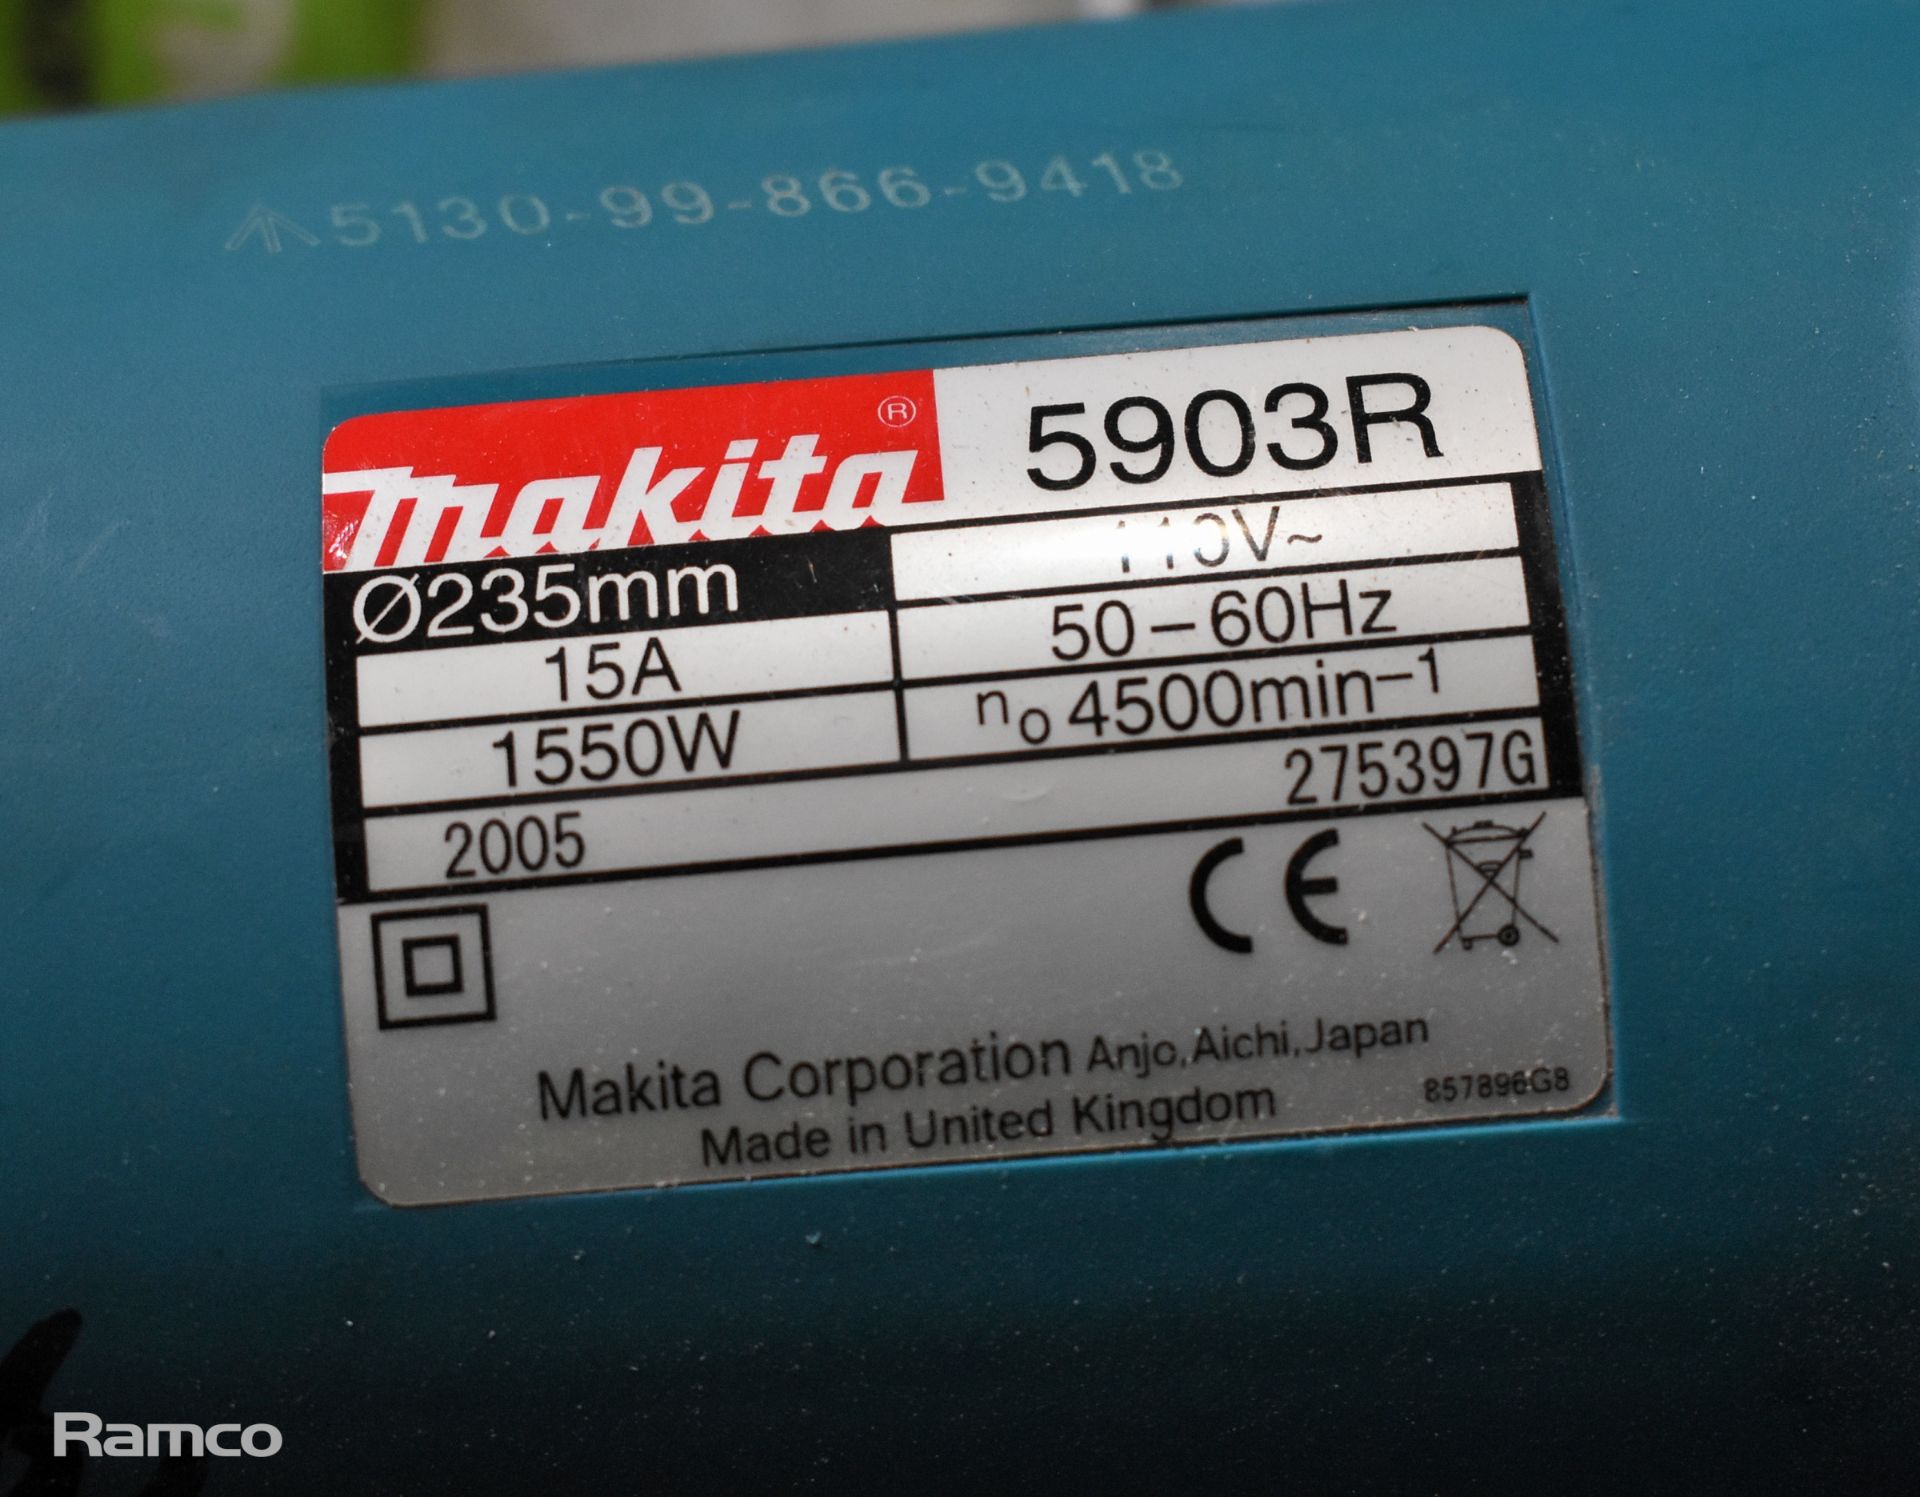 Makita 5903R electric circular saw - 235mm - 1550W - 110V - in hard plastic carry case - Bild 5 aus 7